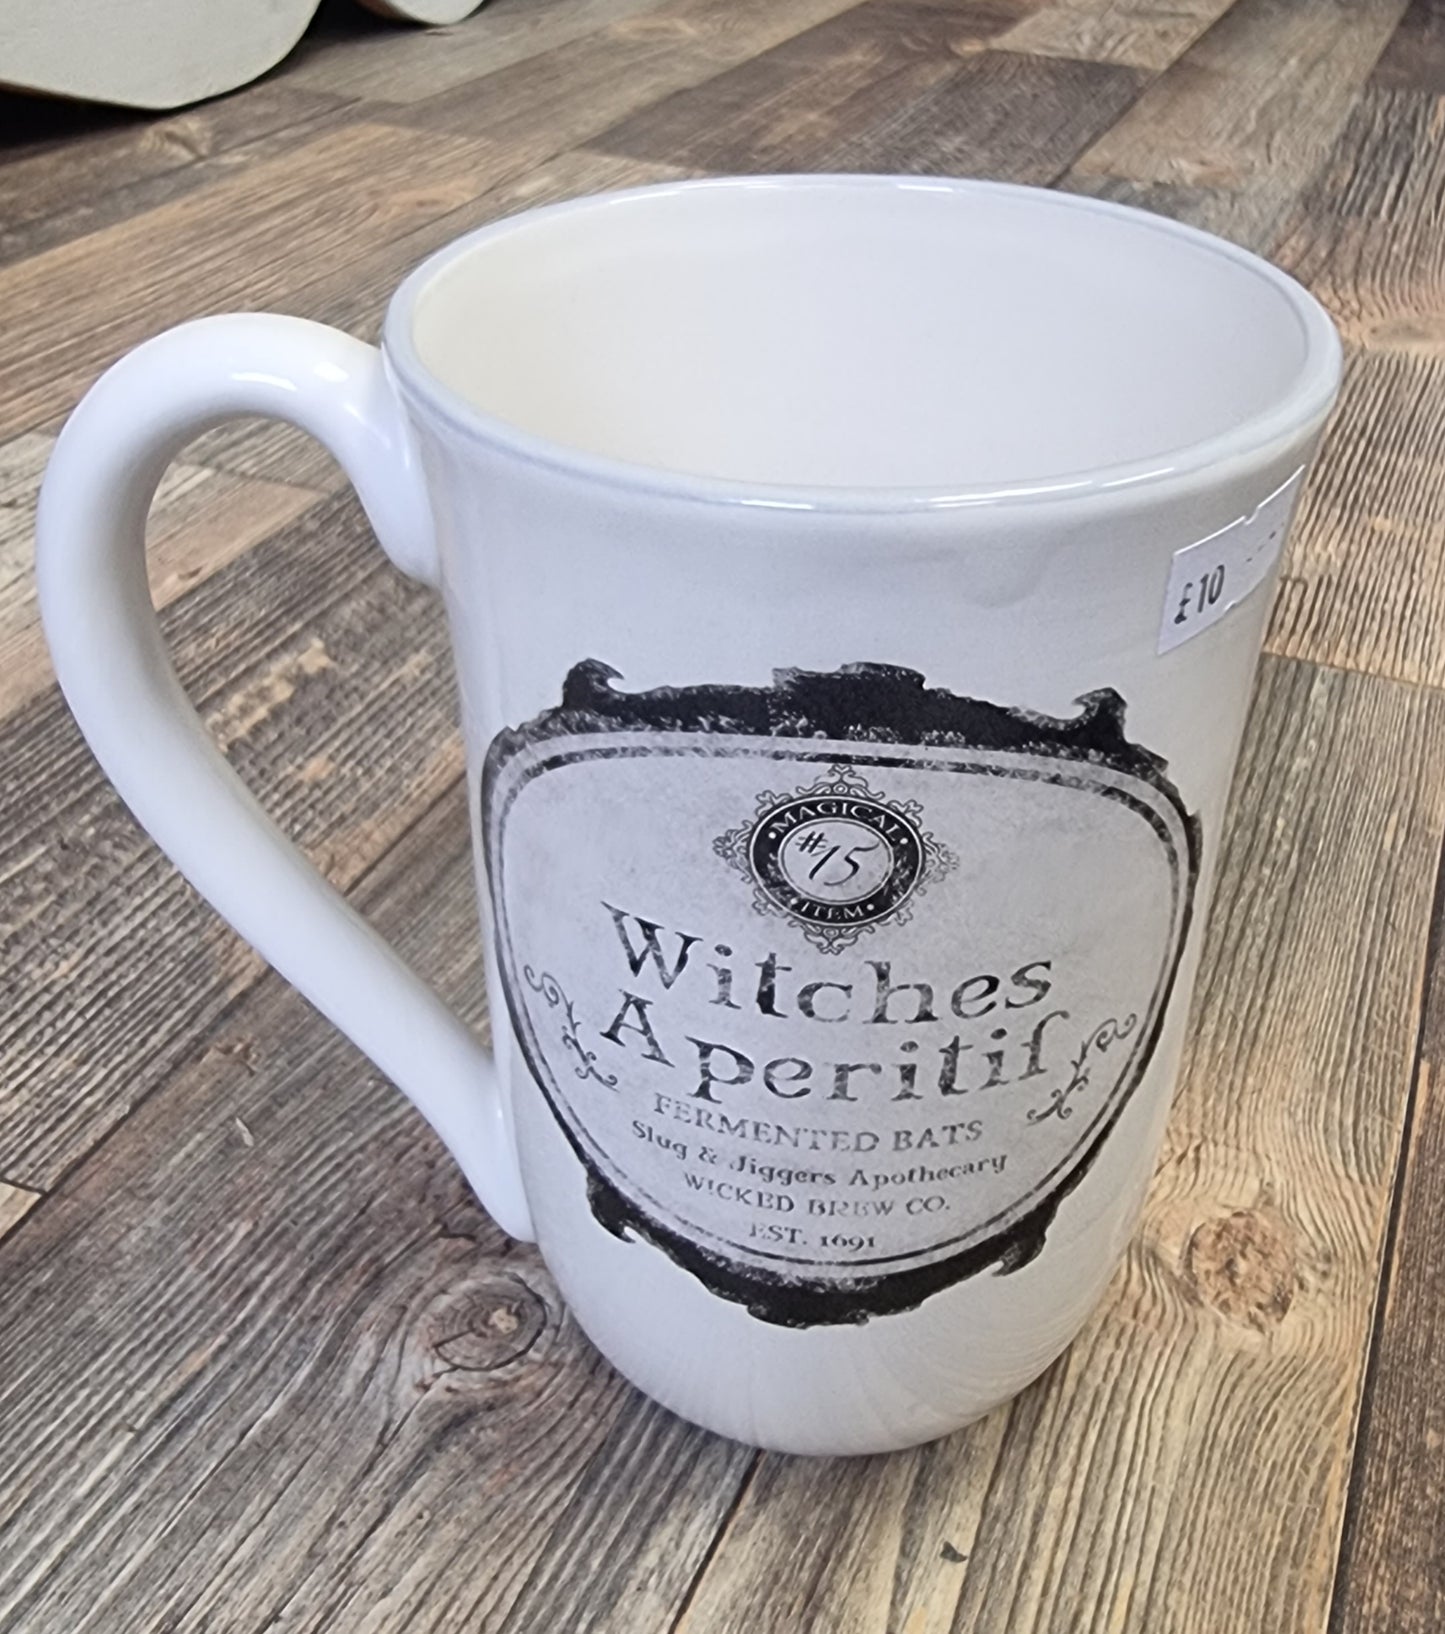 Witches Aperitif Mug